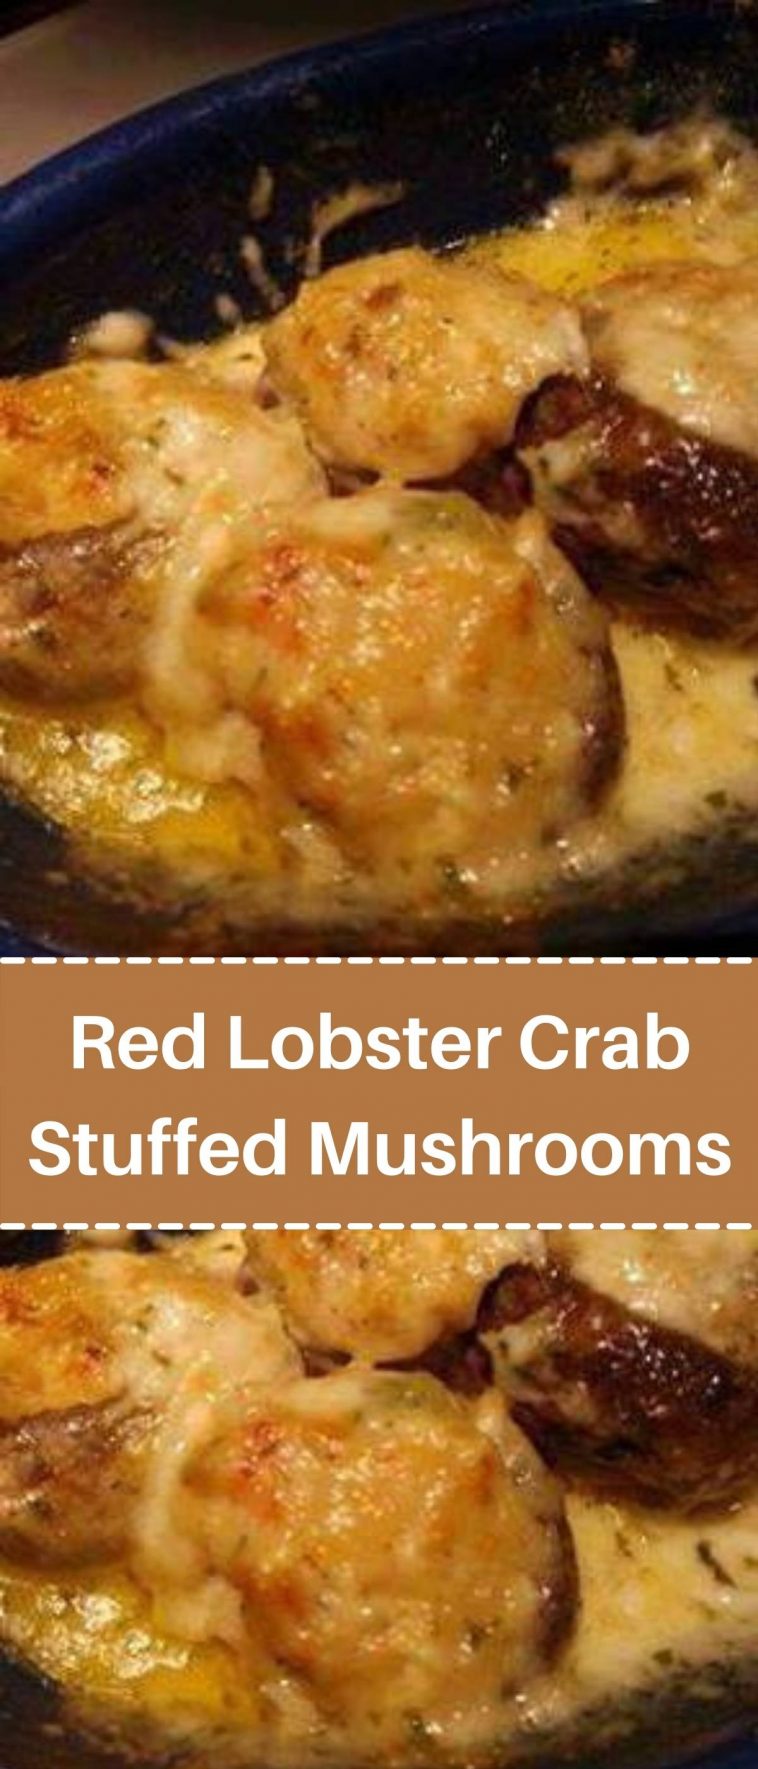 Red Lobster Crab Stuffed Mushrooms